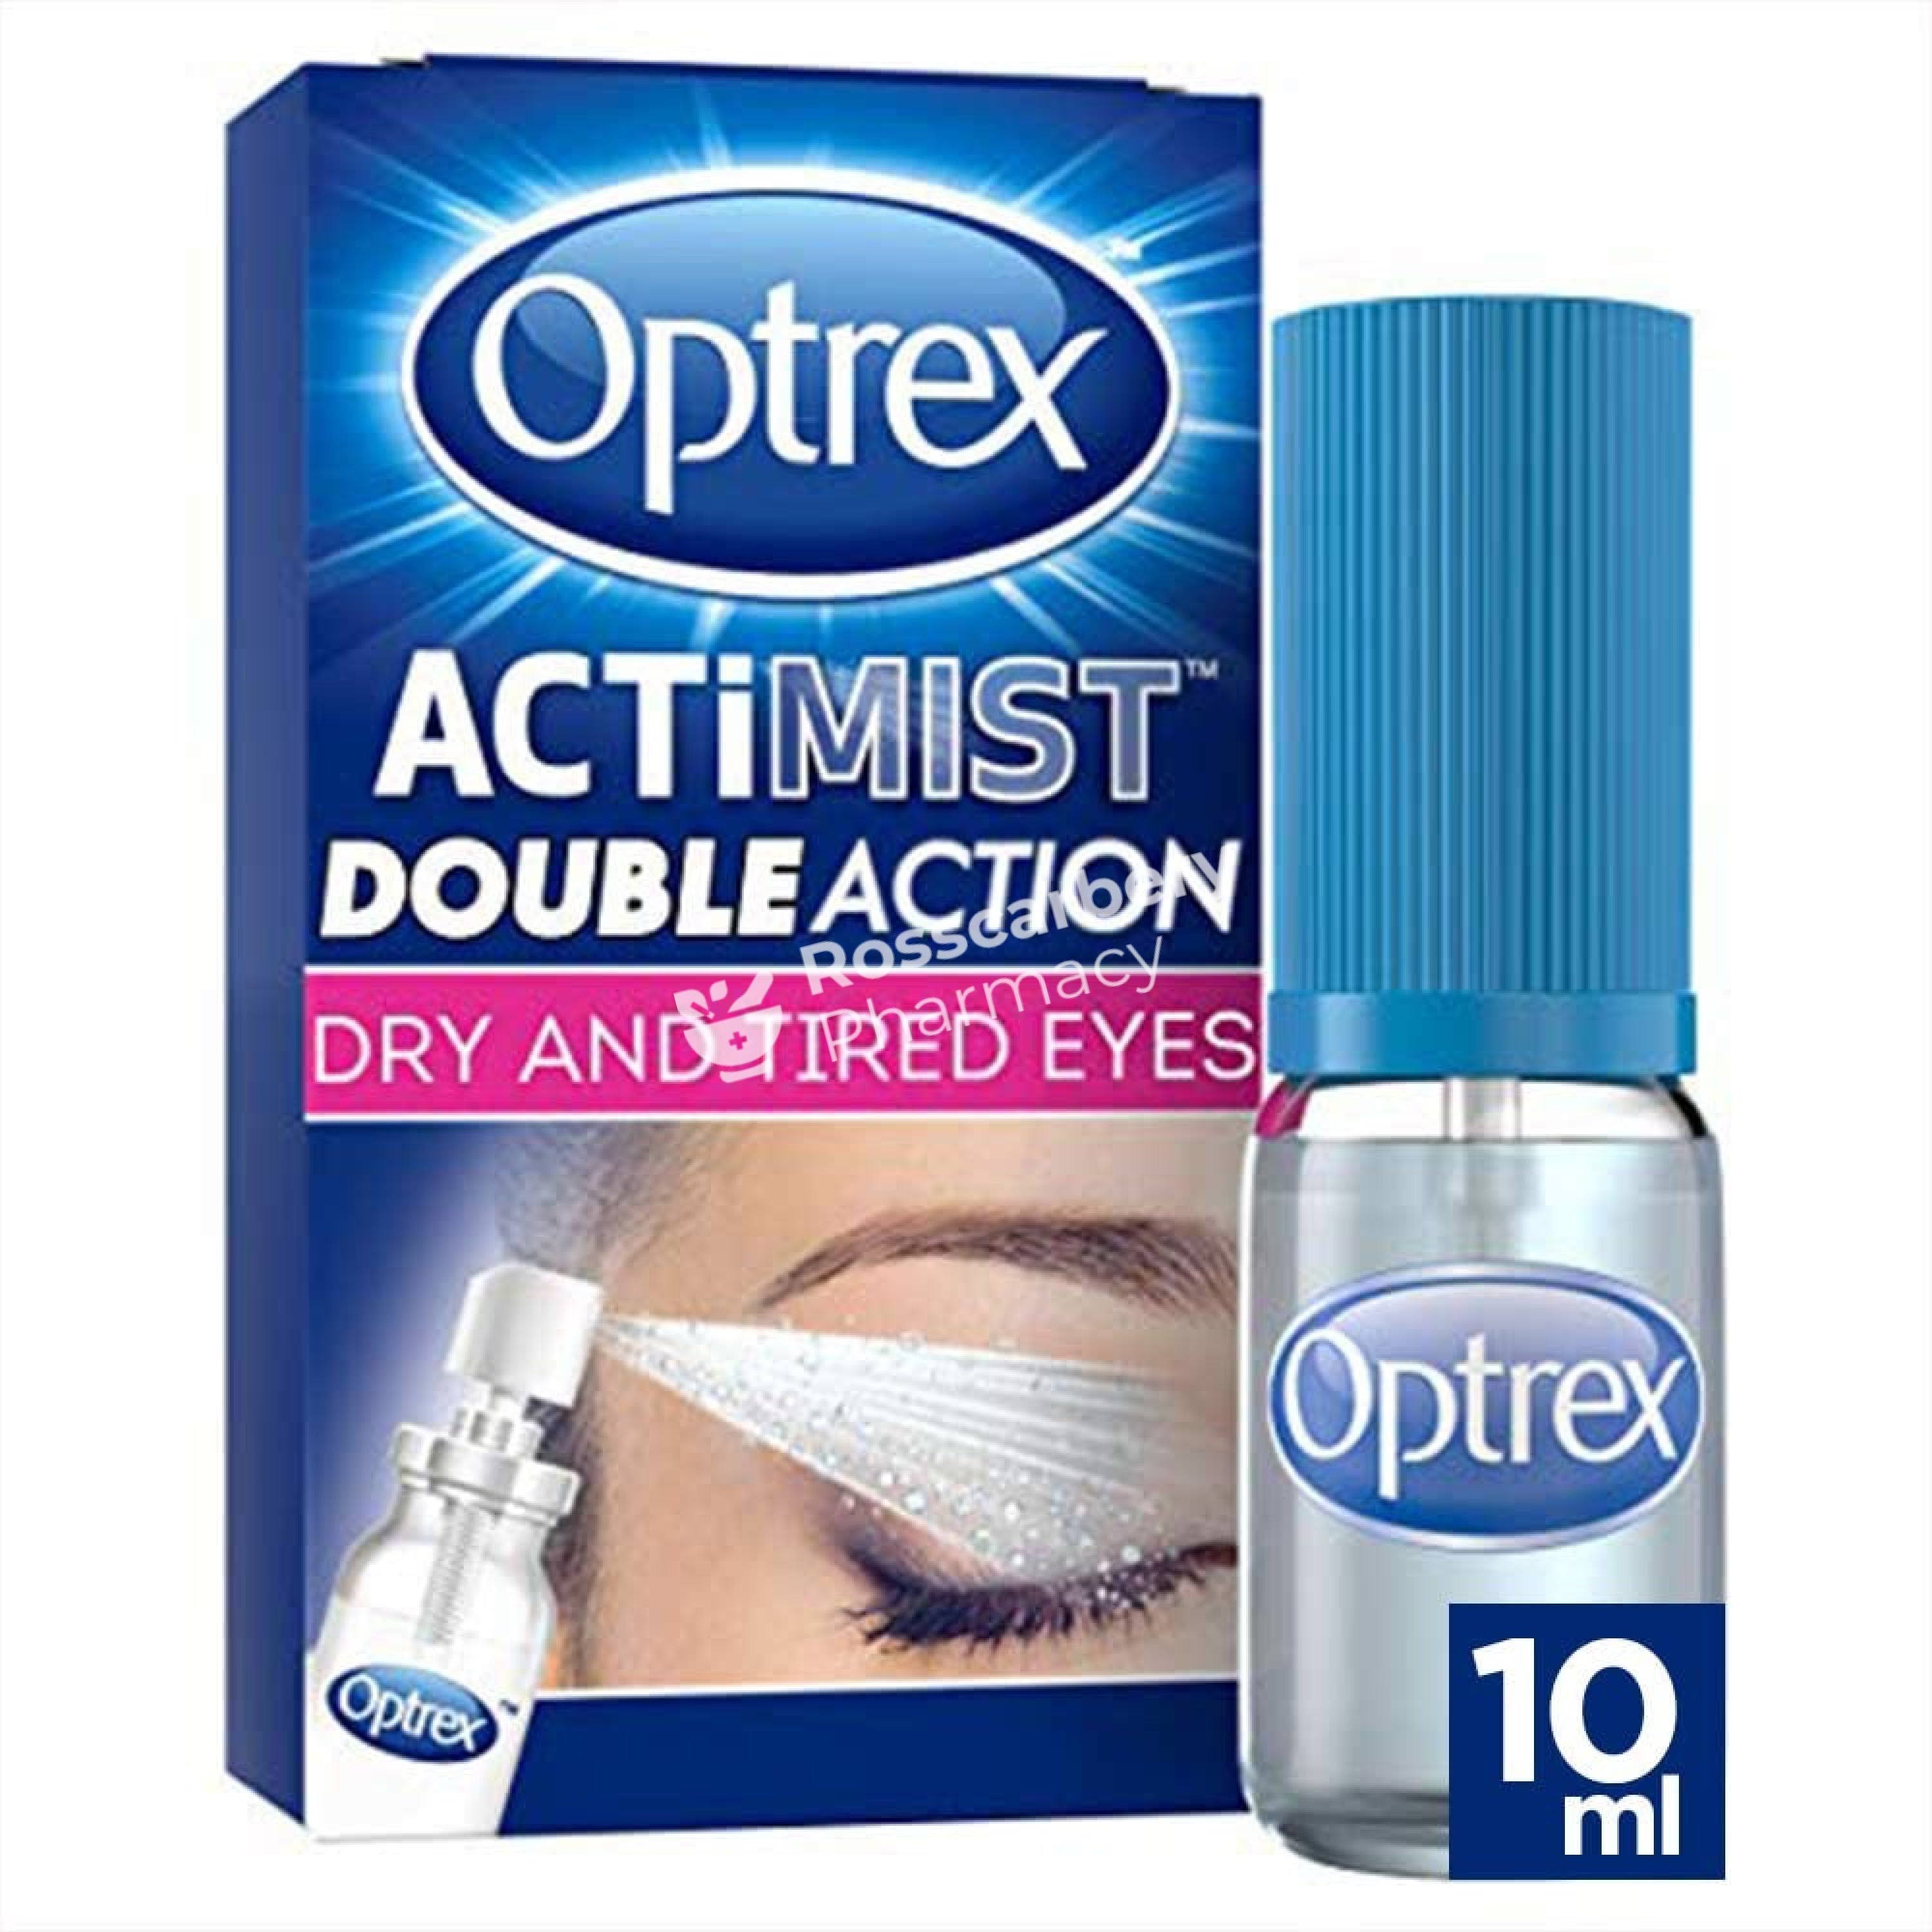 Optrex ActiMist Dry & Irritated Eye Spray 10ml